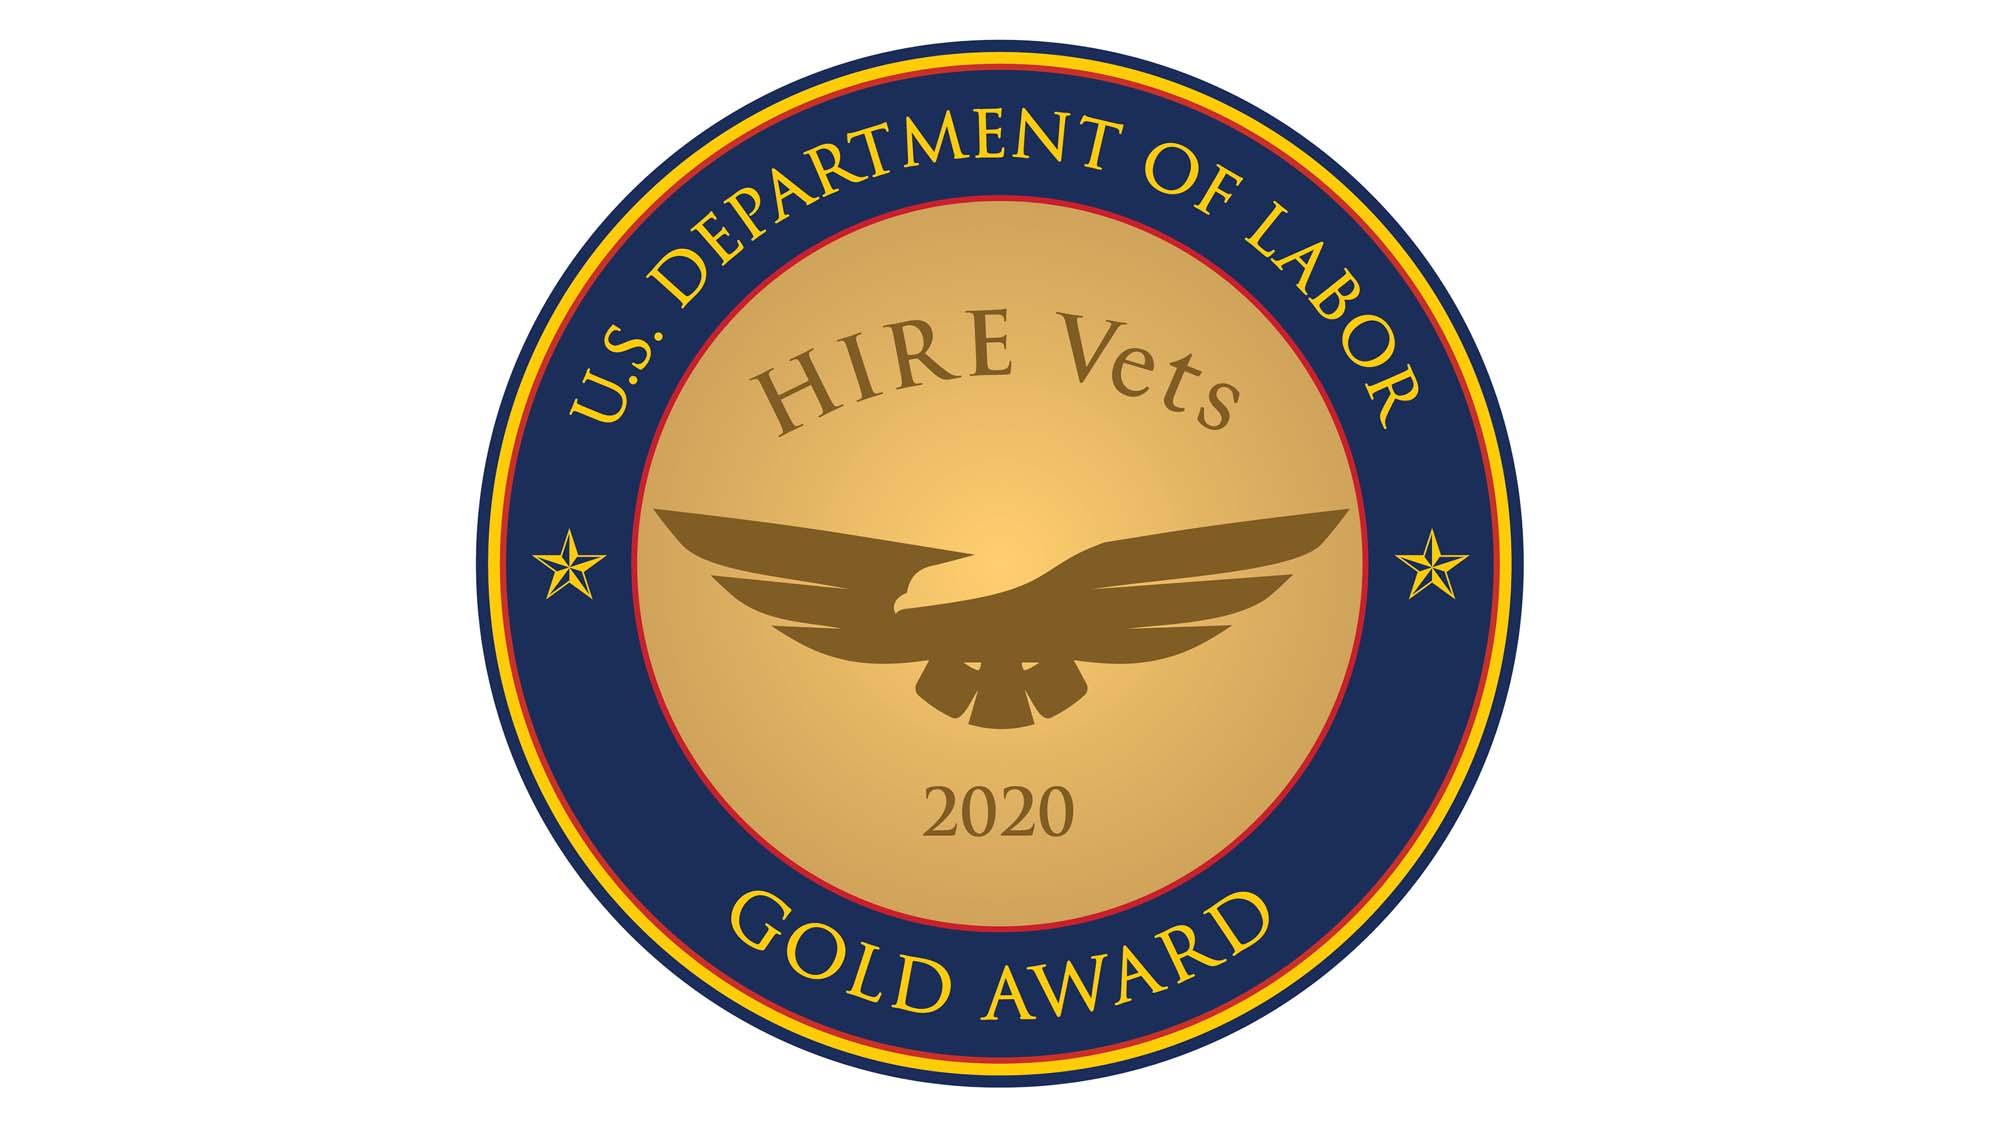 HIRE Vets Medallion Award